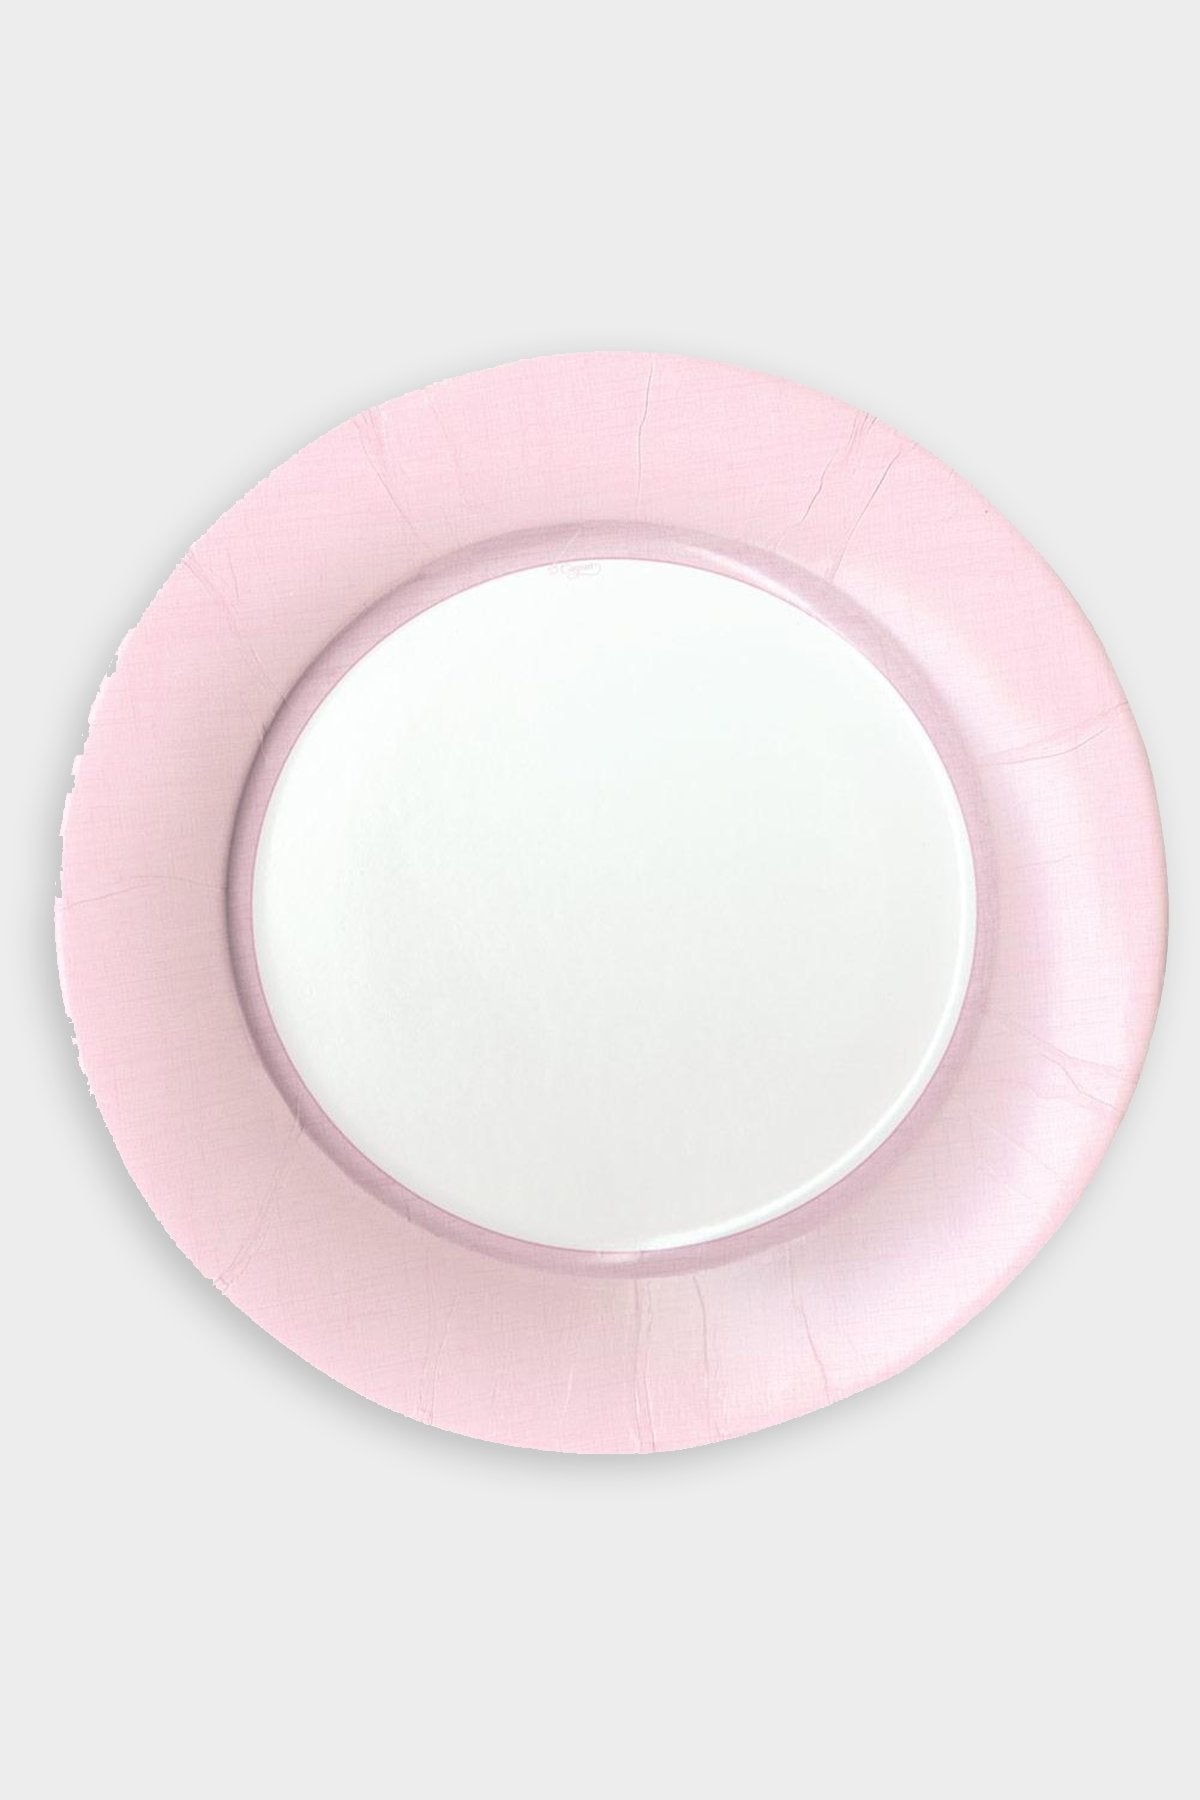 Linen Border Paper Dinner Plates in Petal Pink - 8 Per Package - shop-olivia.com